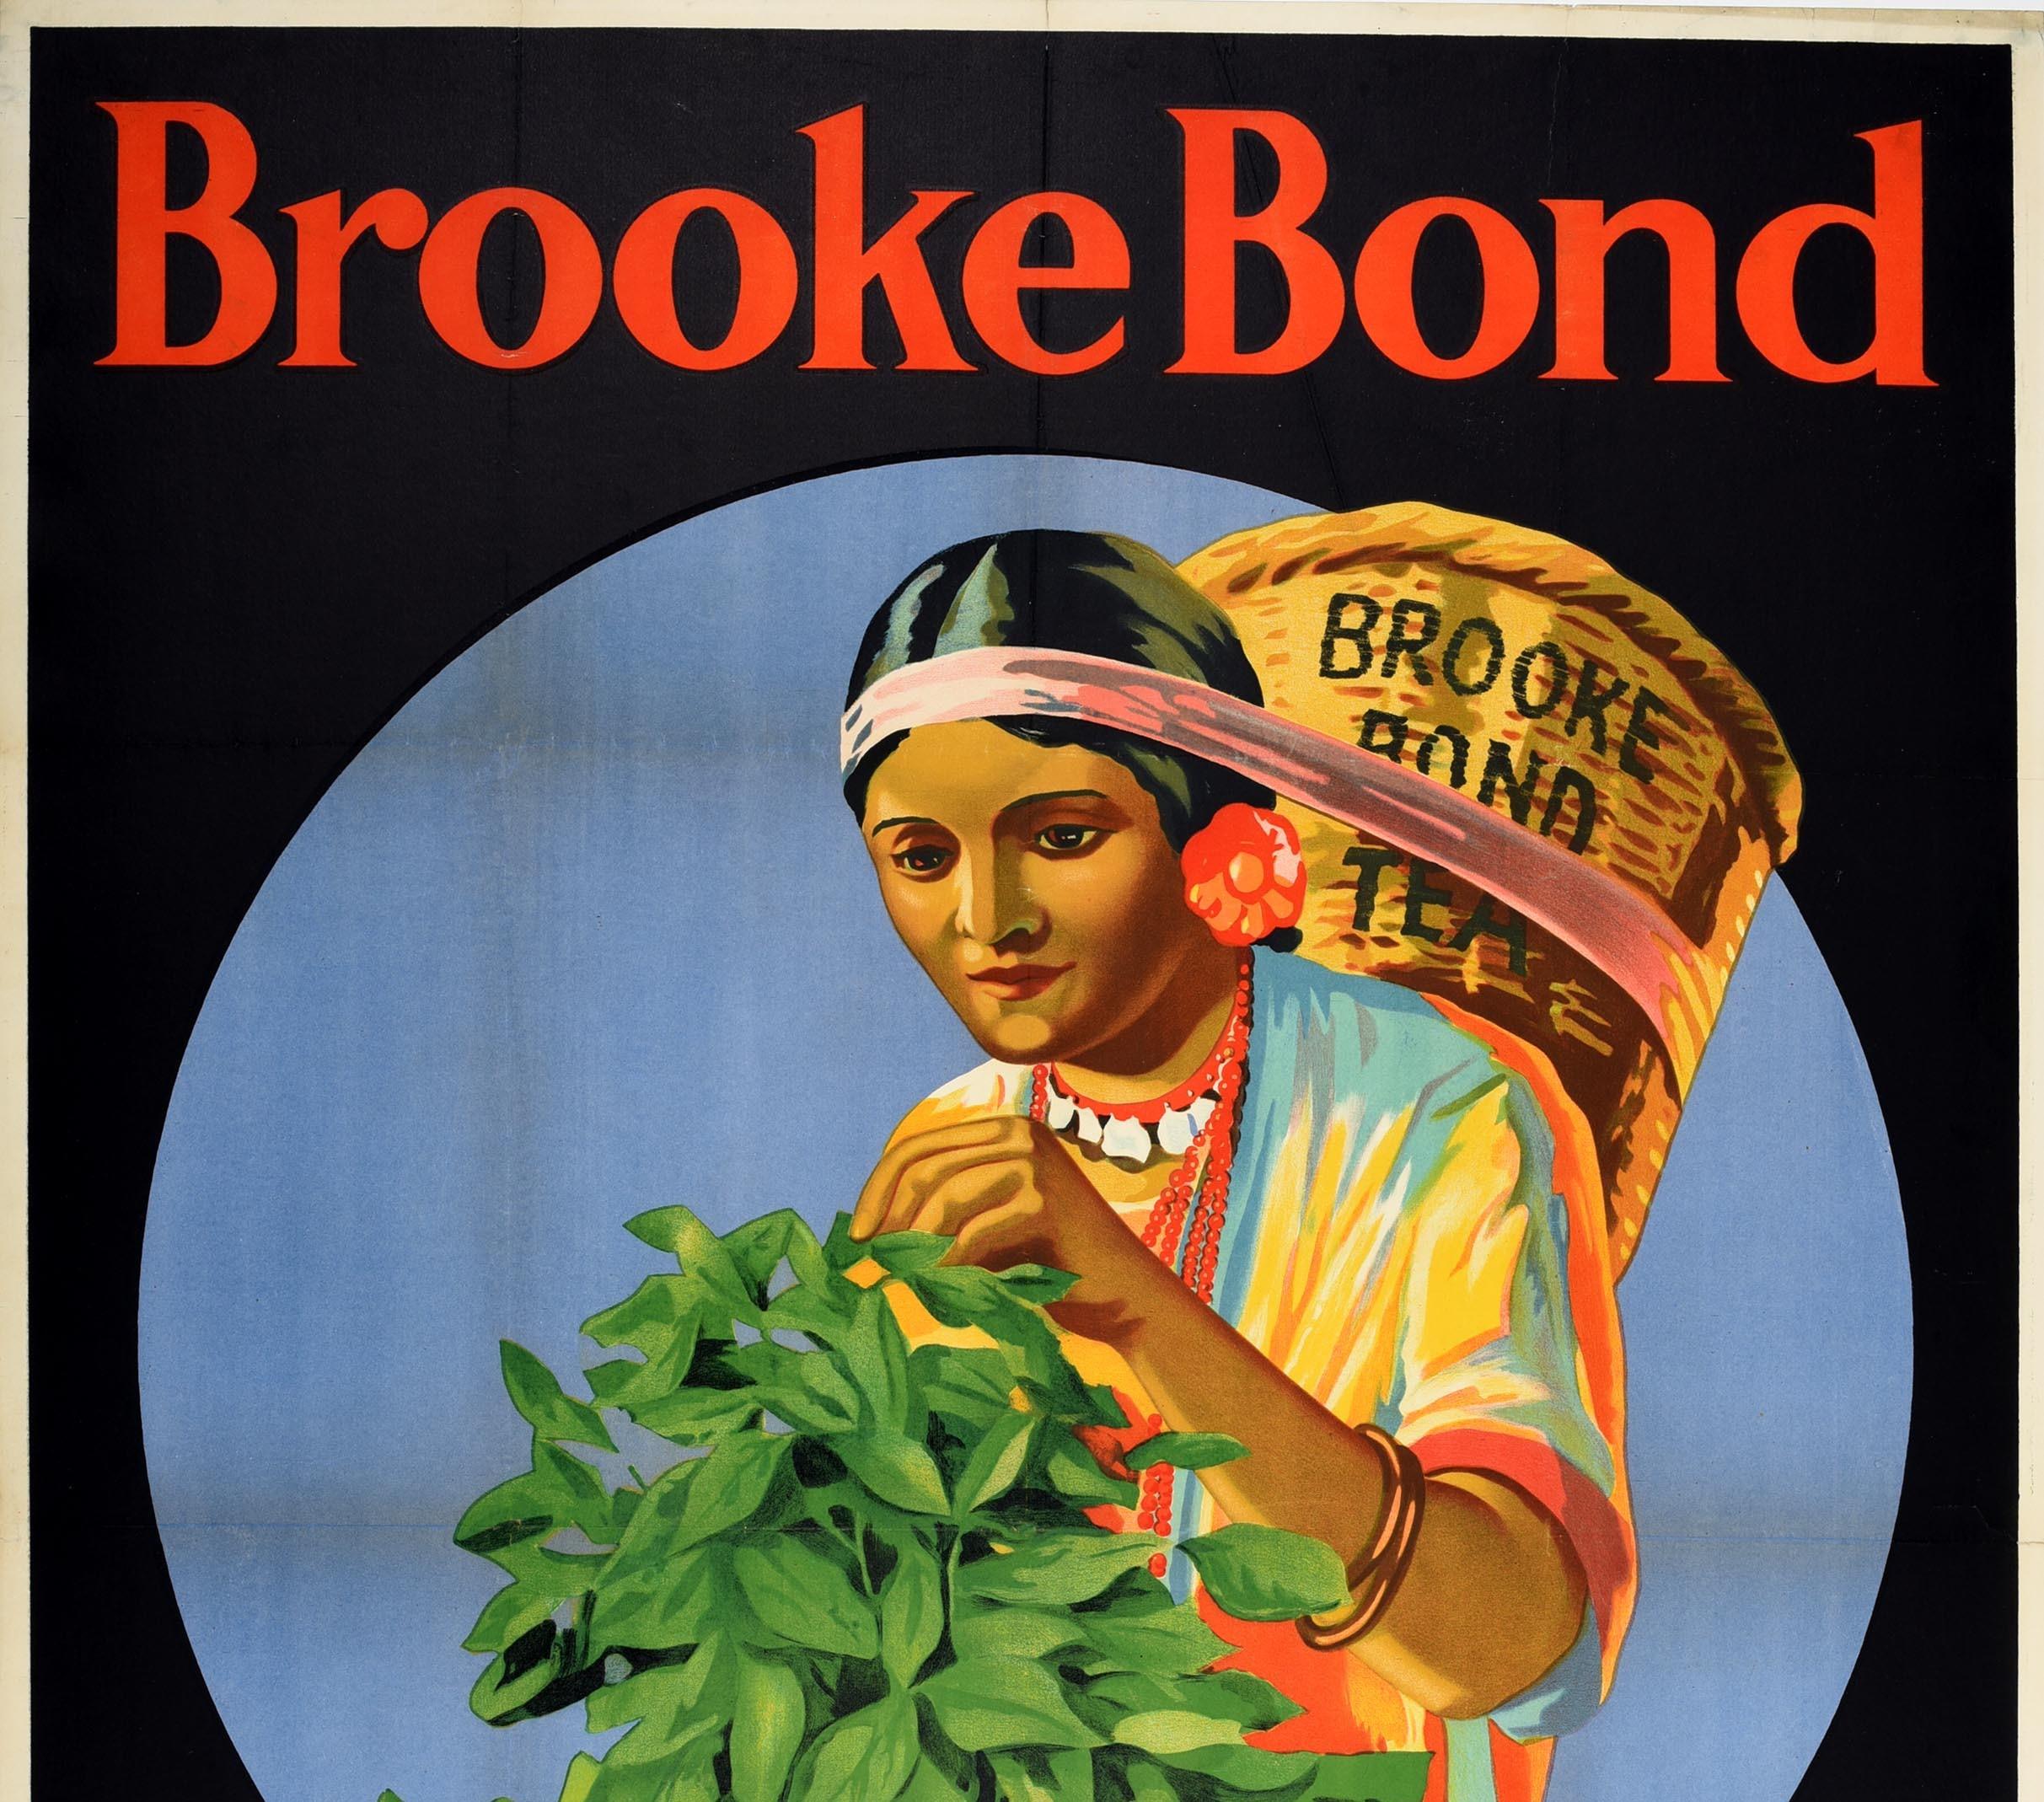 Original Vintage Drink Advertising Poster Brooke Bond Edglets Tea Picker Design - Print by Unknown